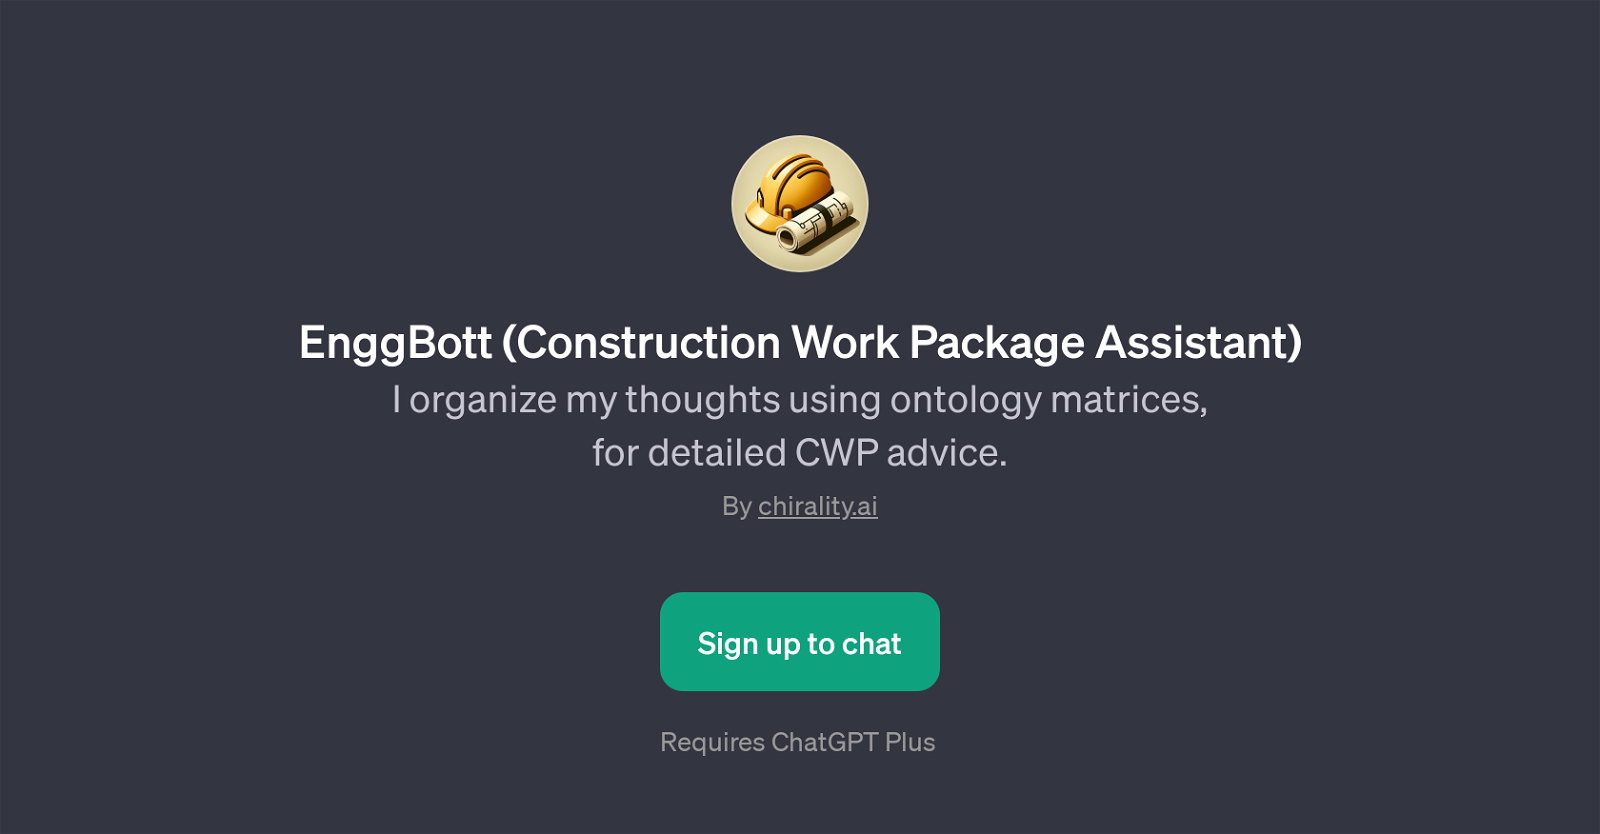 EnggBott (Construction Work Package Assistant) website